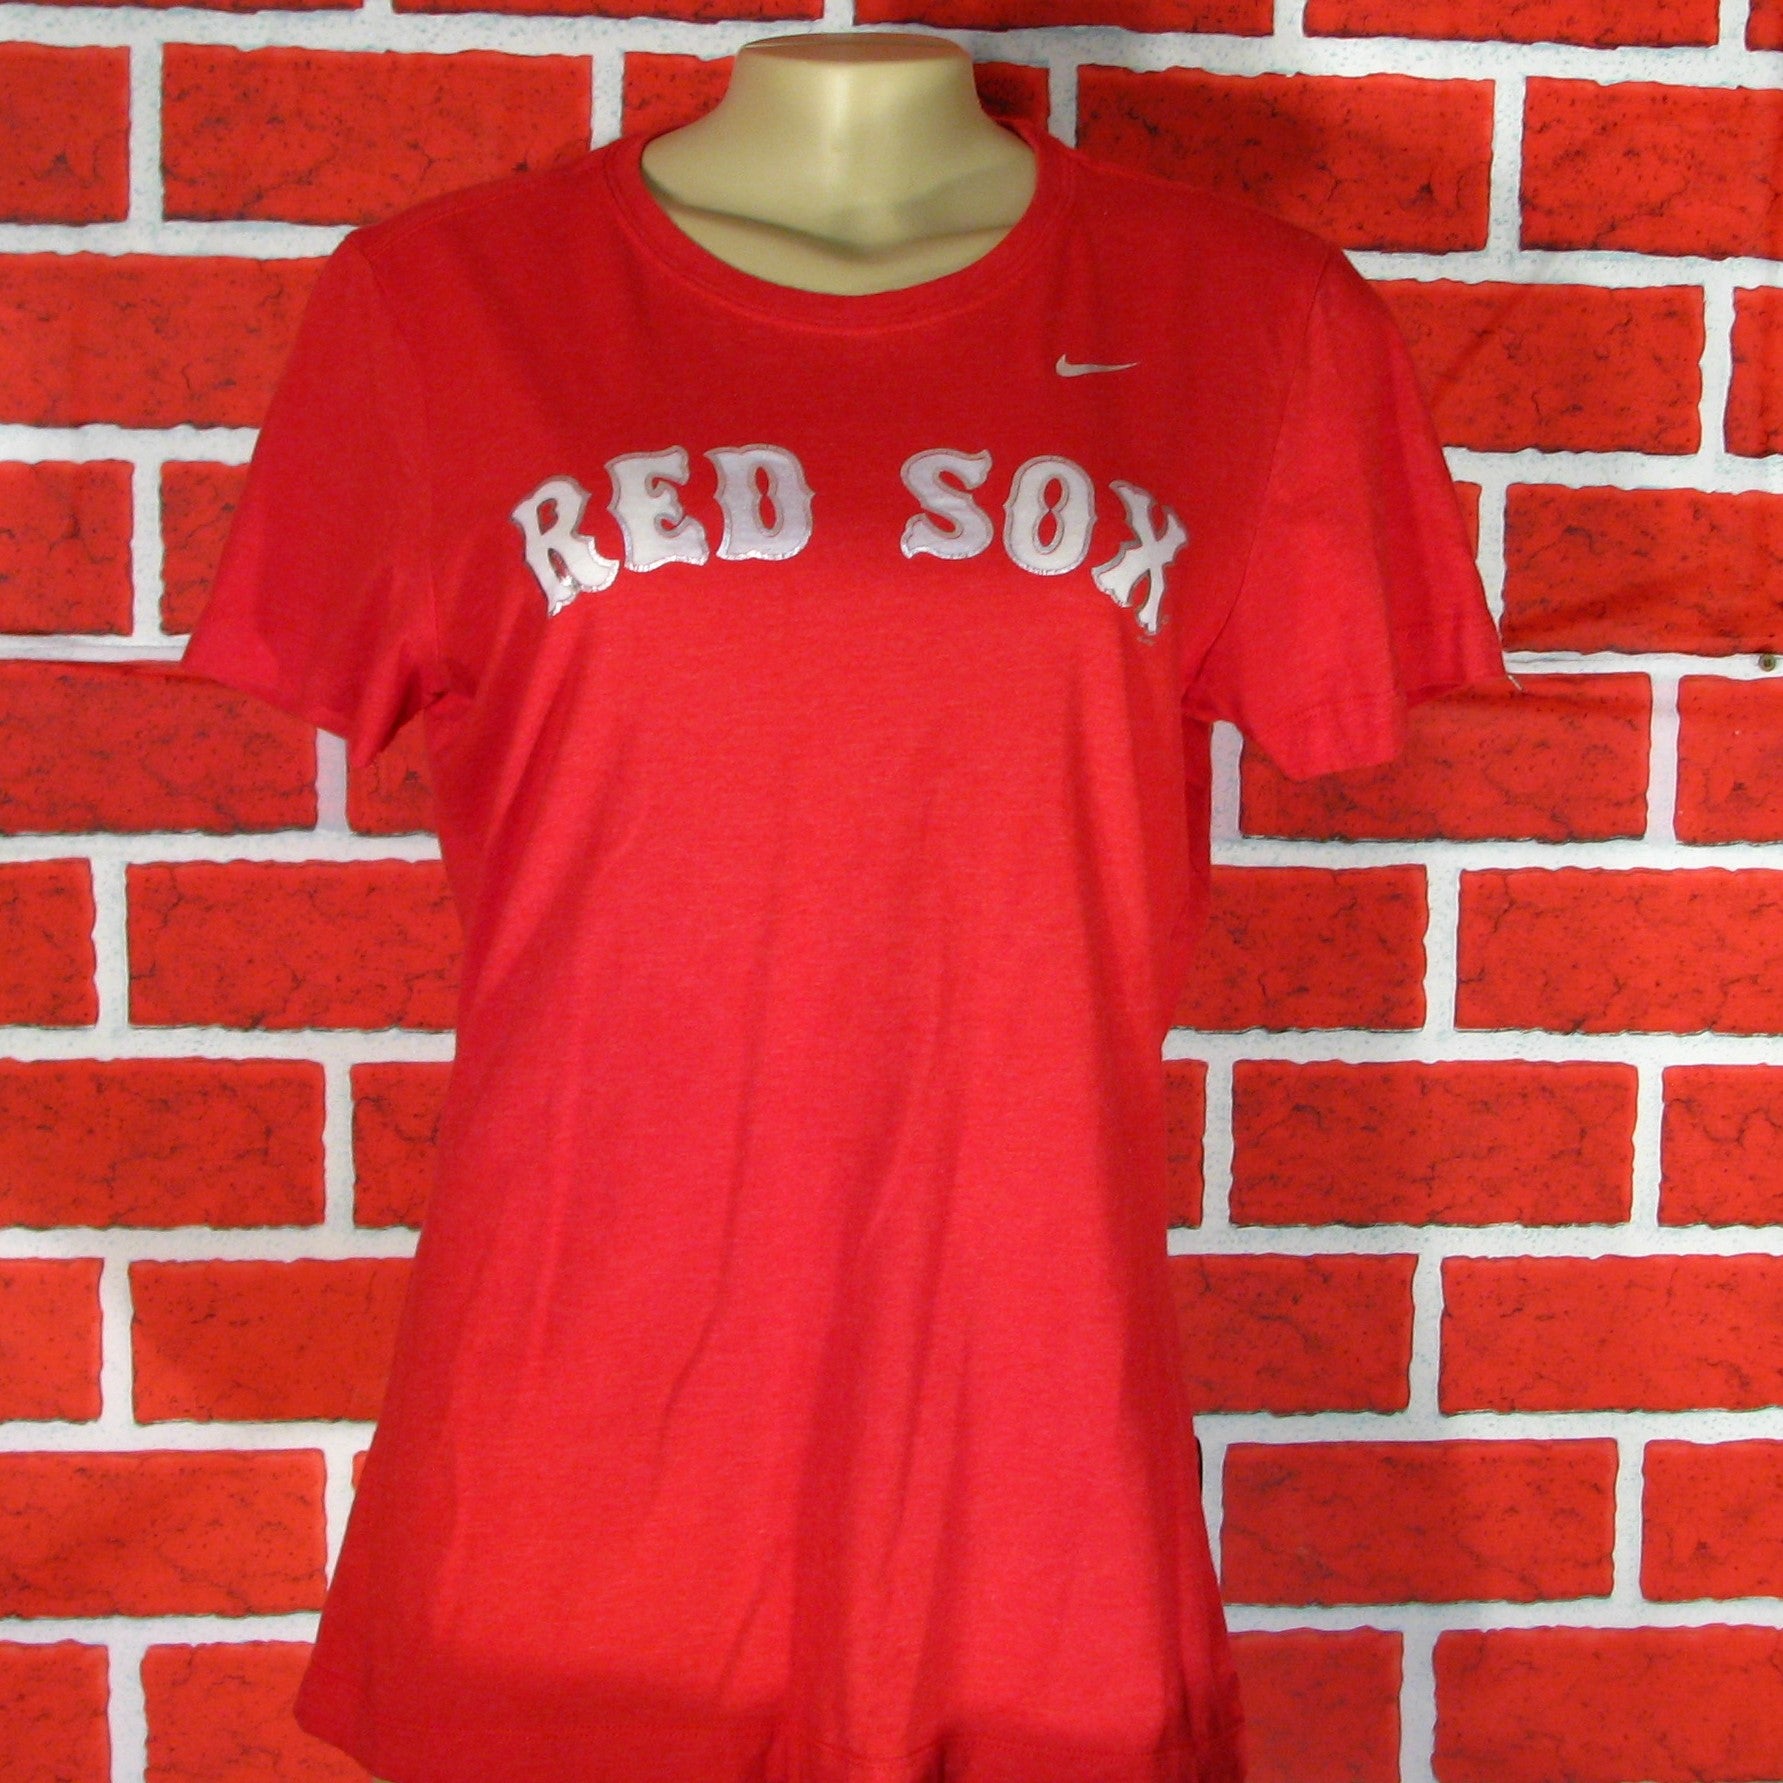 red sox shirt womens